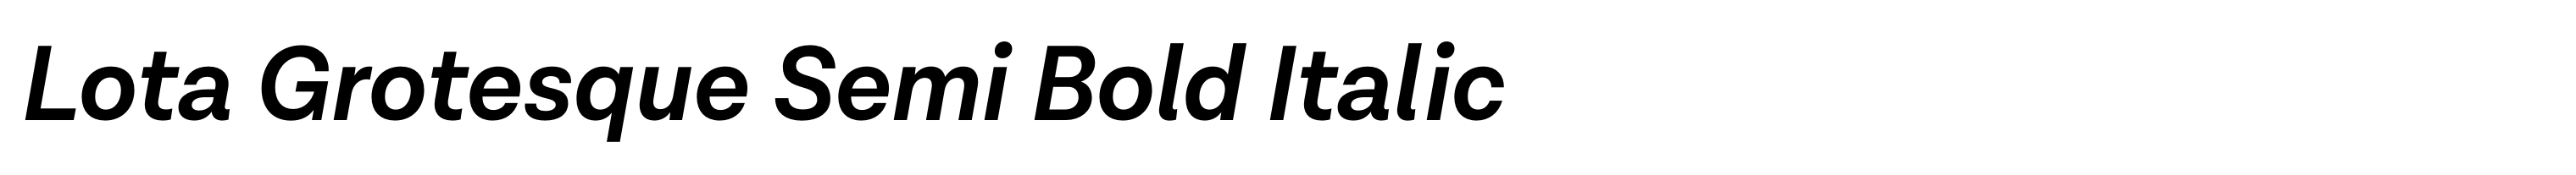 Lota Grotesque Semi Bold Italic